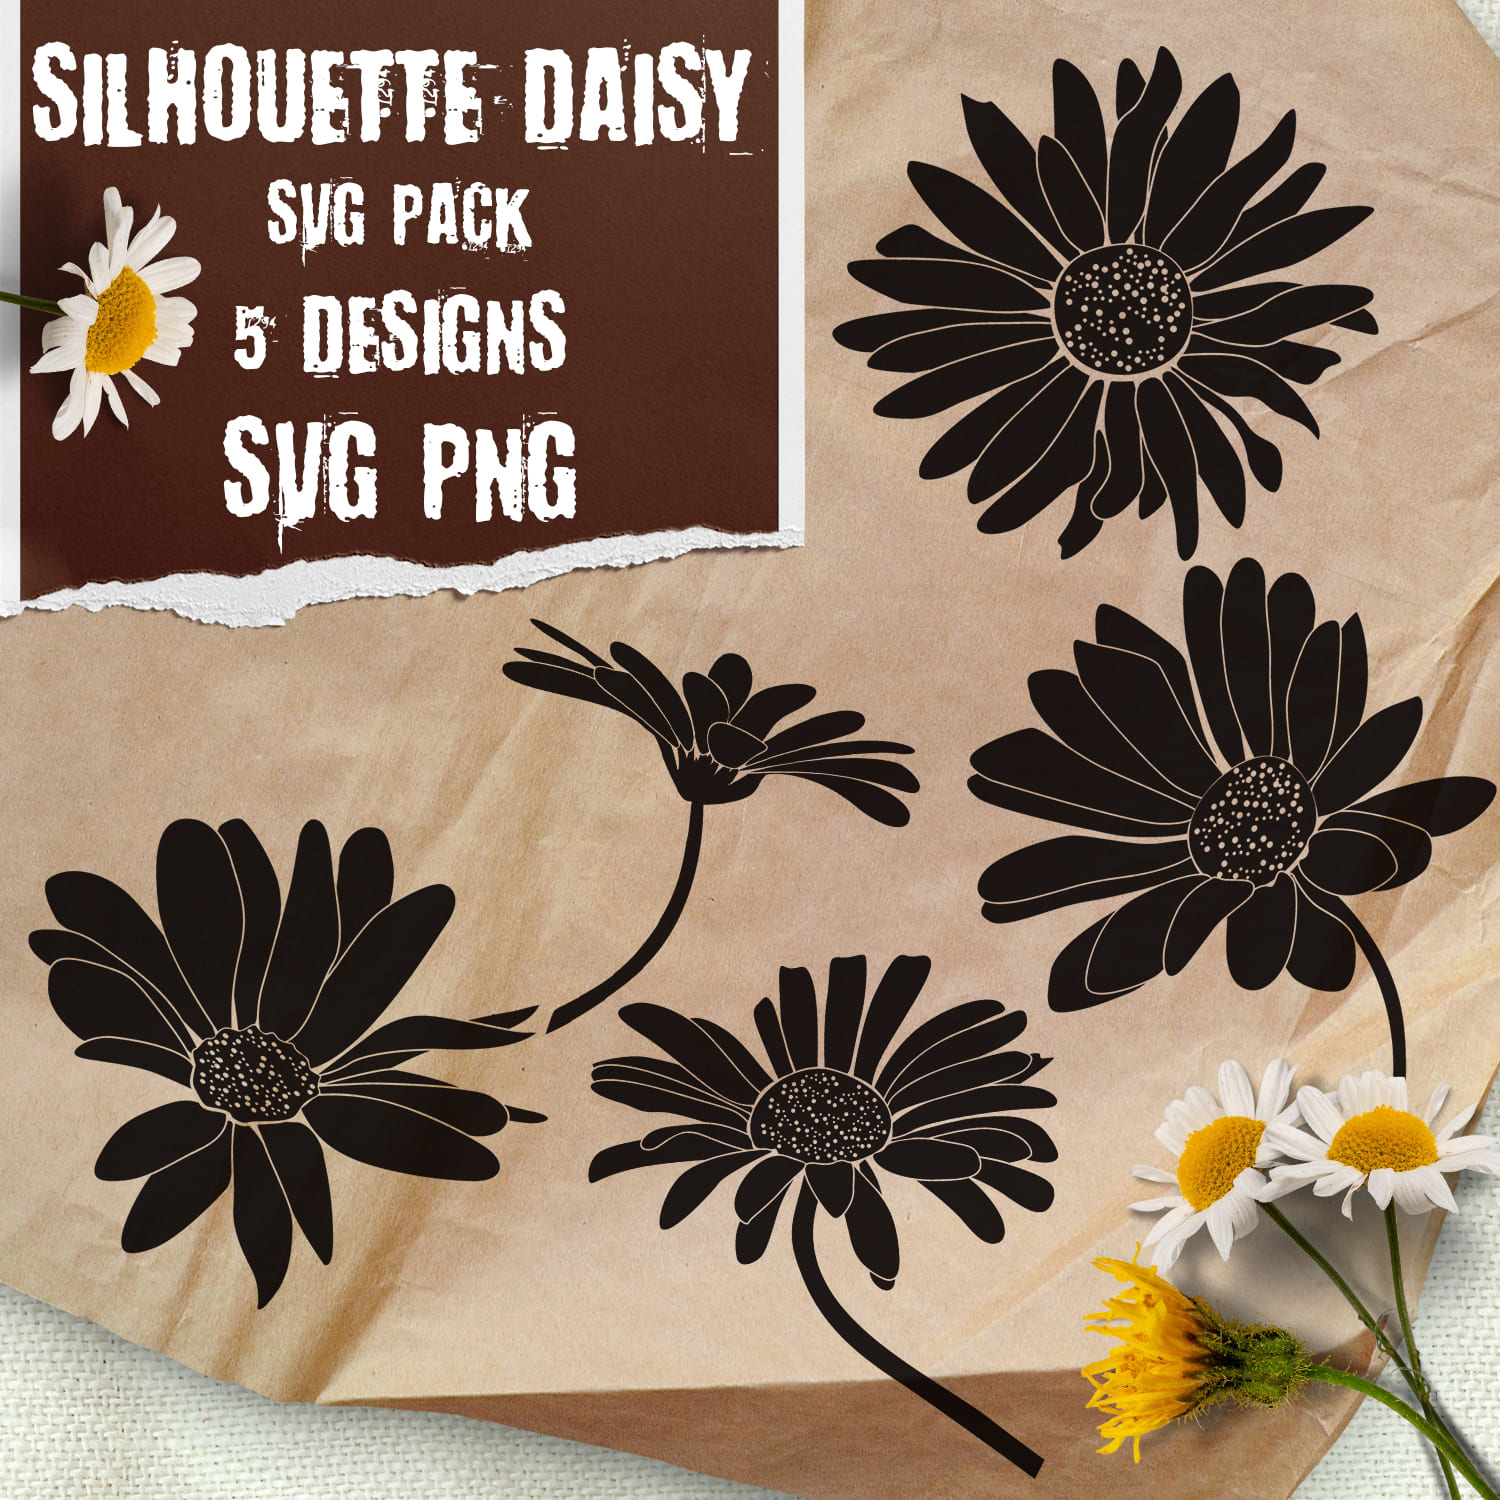 Silhouette Daisy T-shirt Designs Bundle - main image preview.